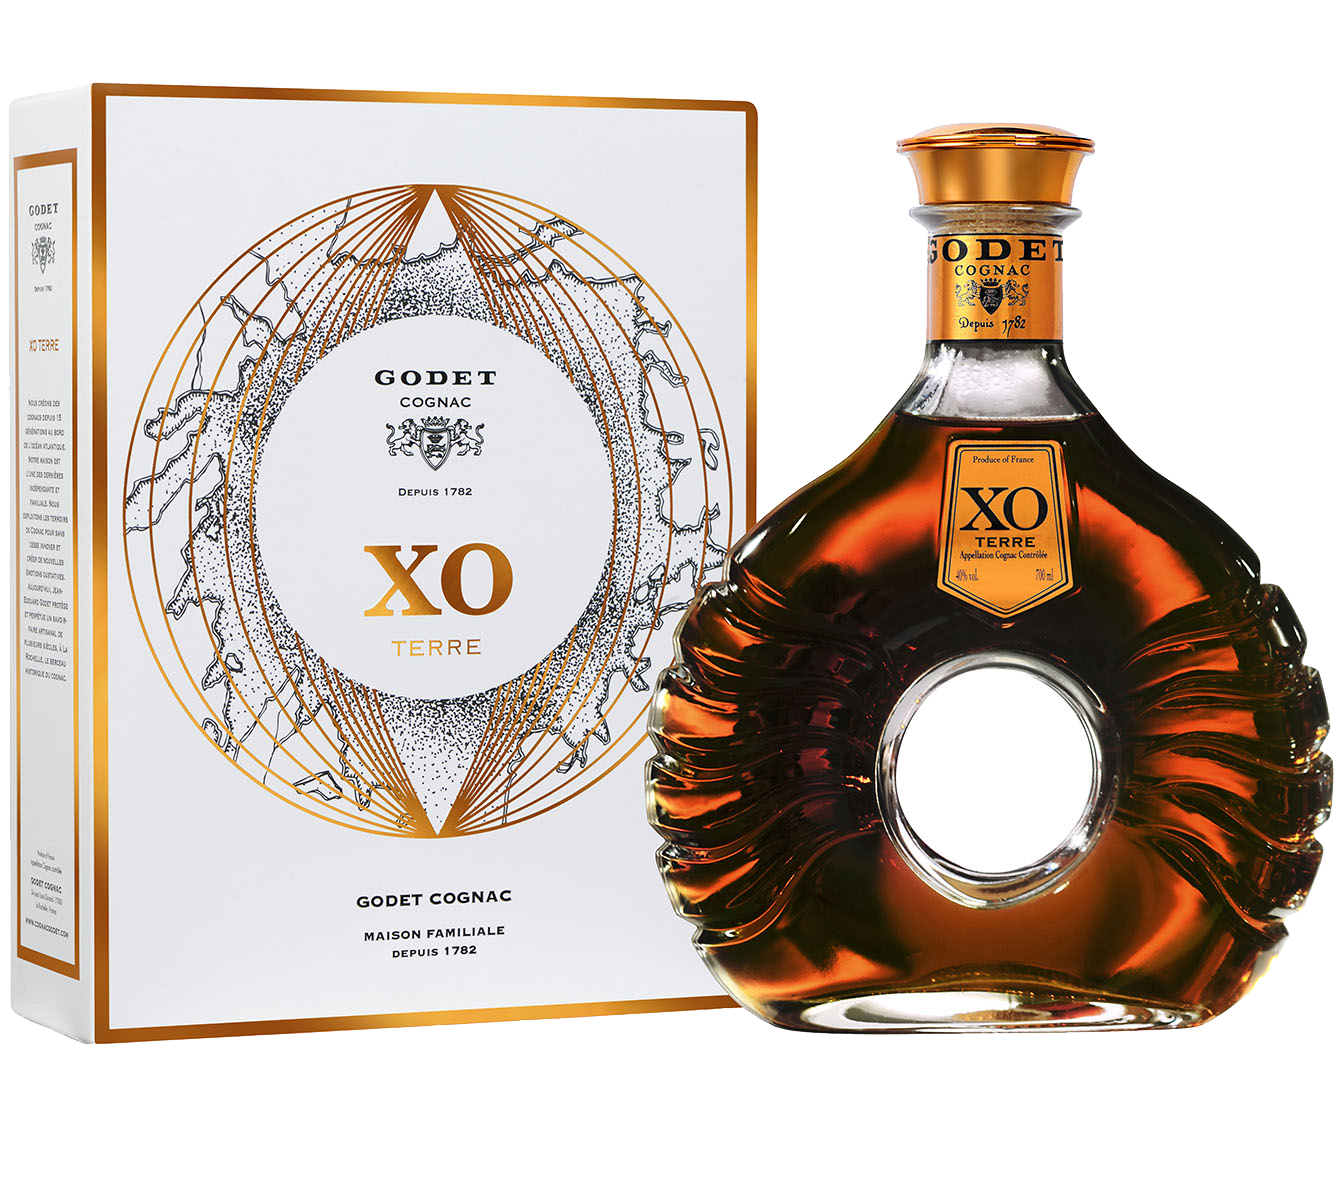 Godet Cognac XO Terre (gift box)